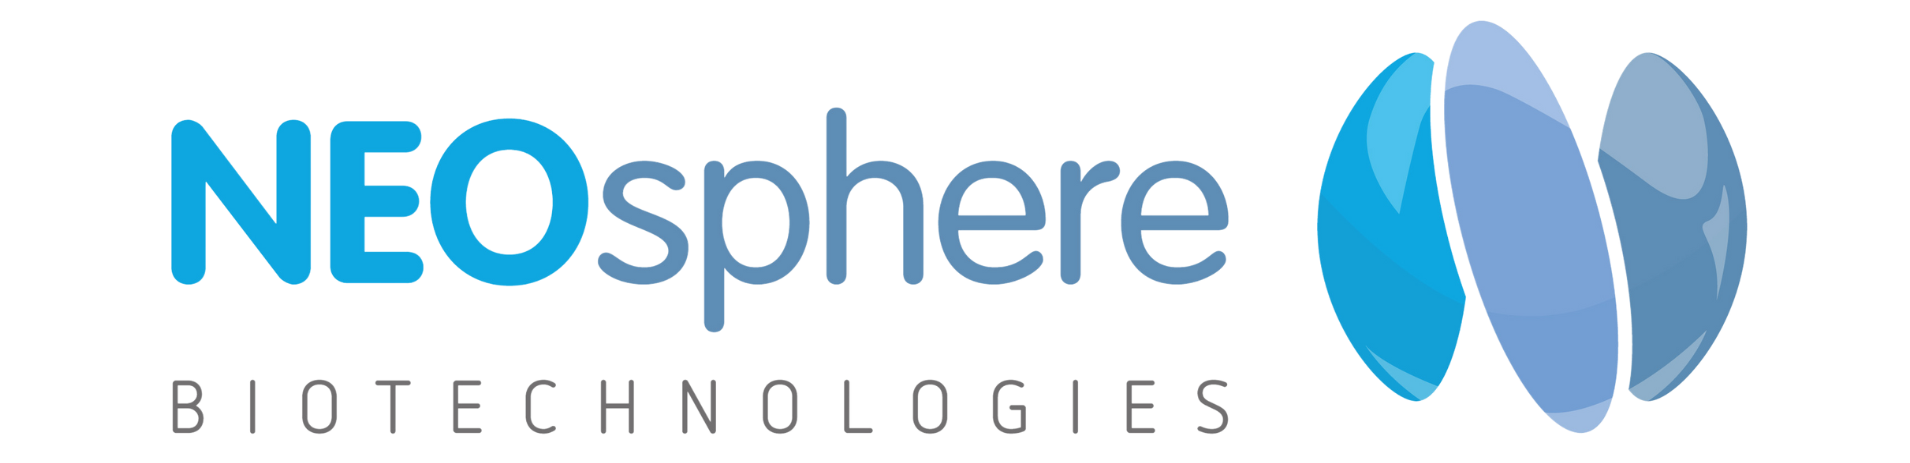 NEOsphere Biotechnologies (1)